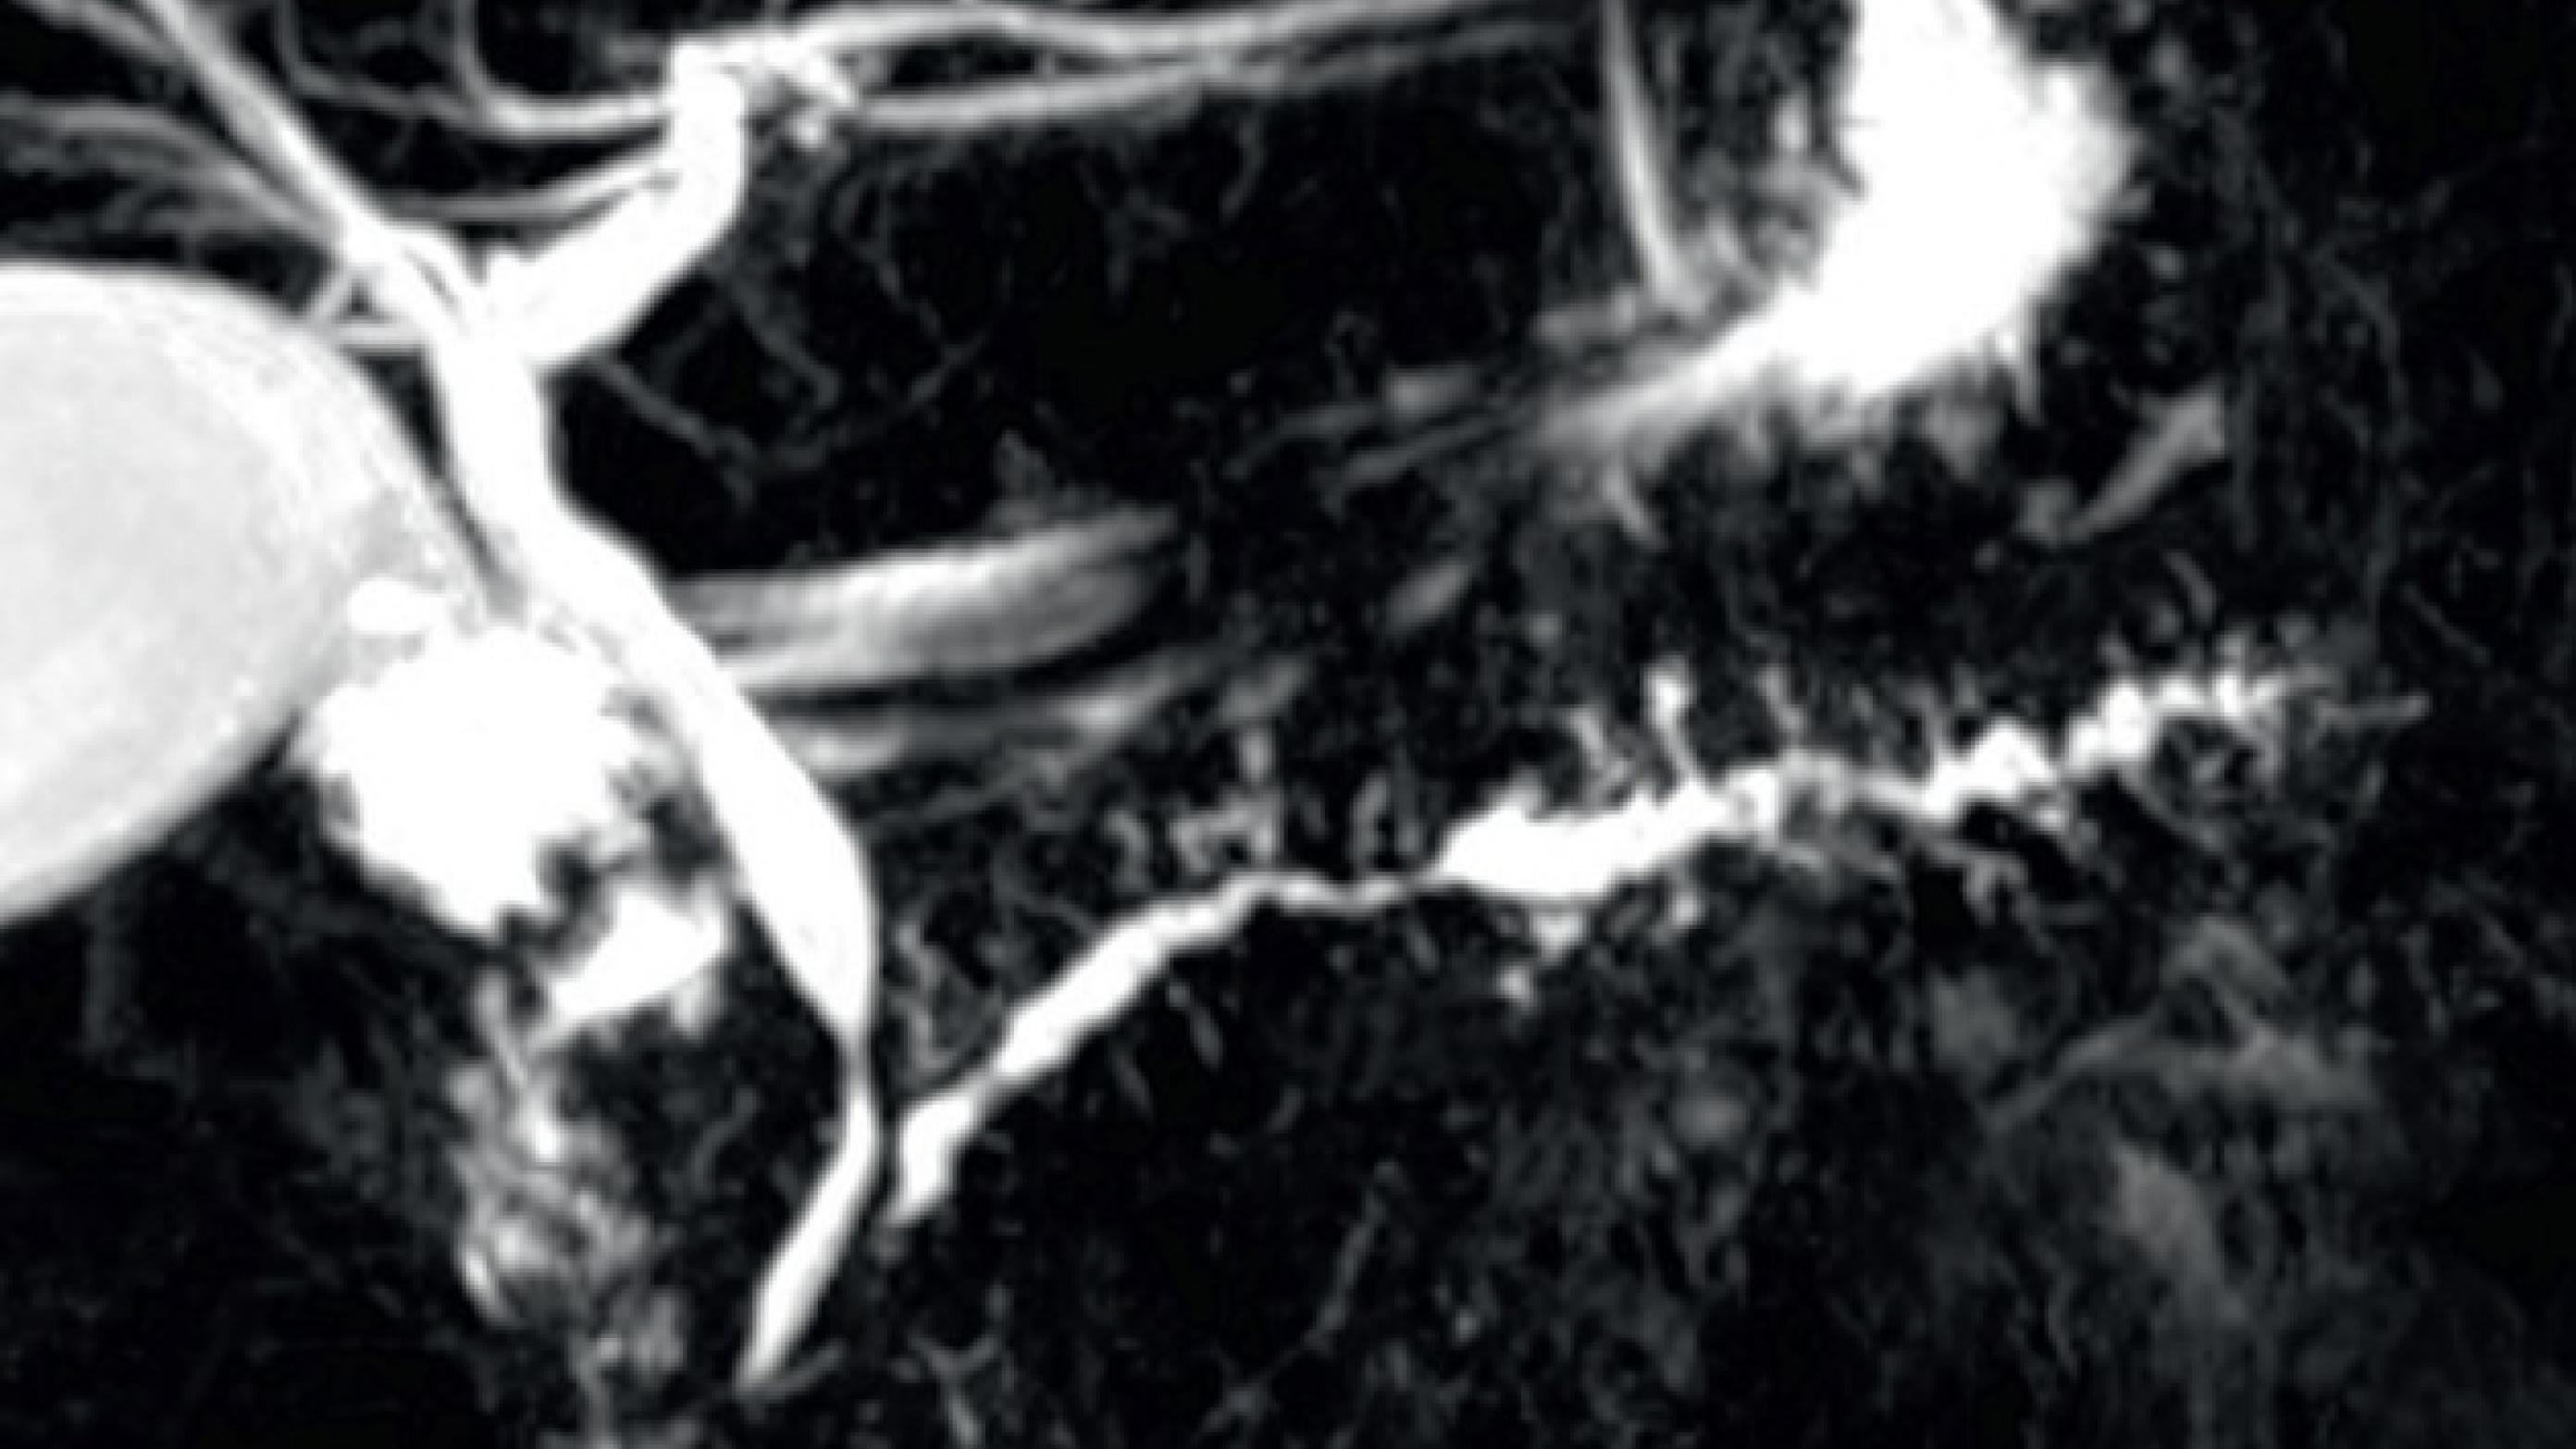 MR-kolangiopankreatikografi. Der ses udtalte forandringer i ductus pancreaticus.